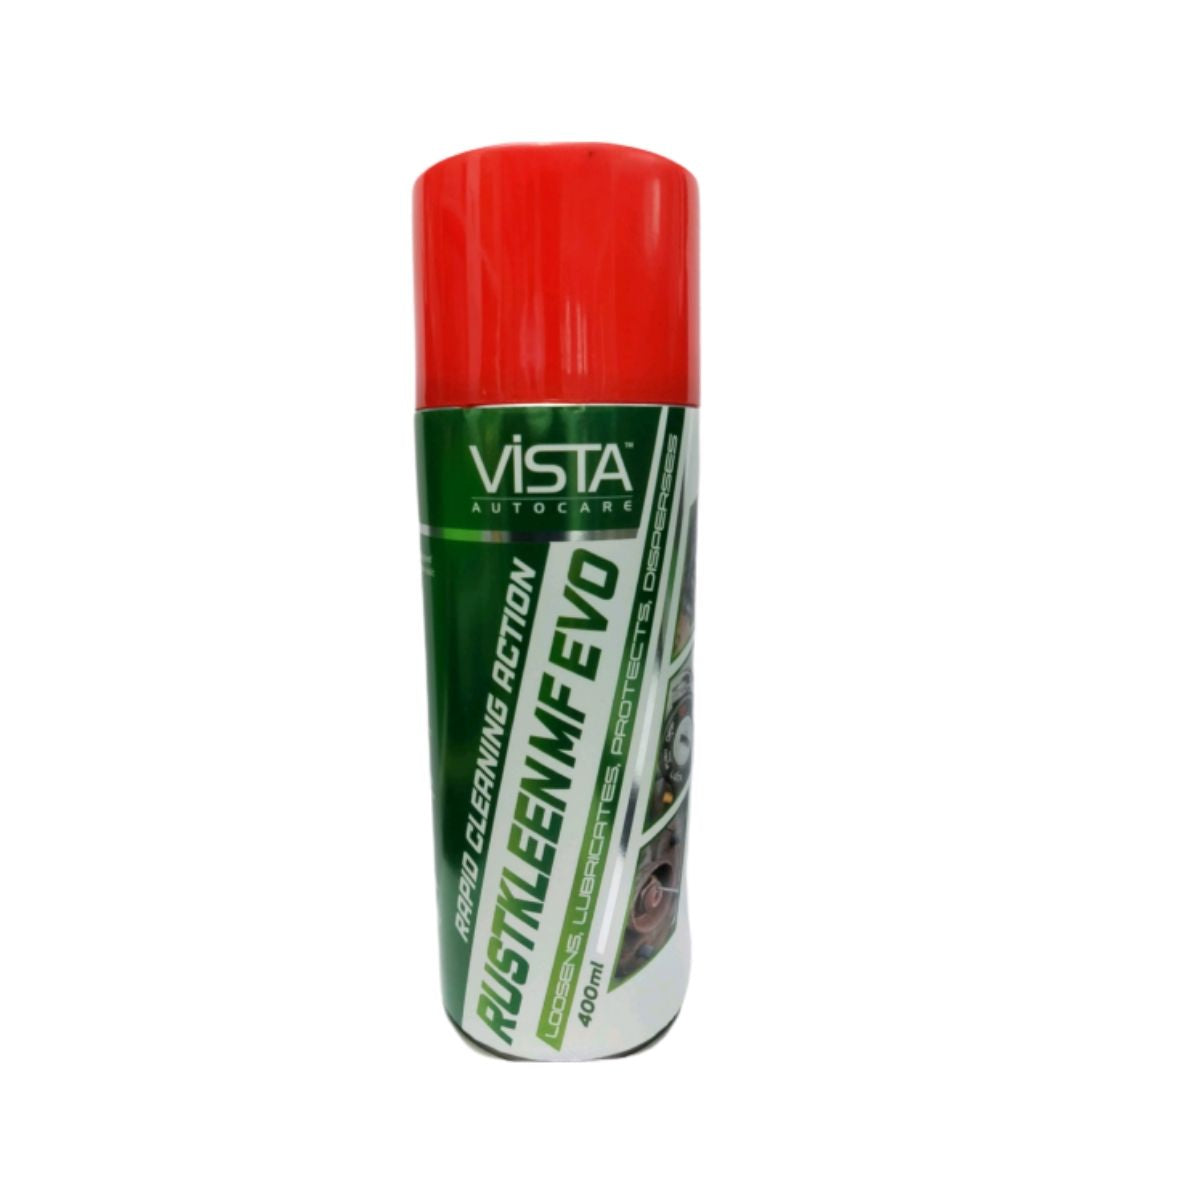 Vista Auto Care: Rustkleen MF Evo Spray (400 ML) - Outdoor Travel Gear 1